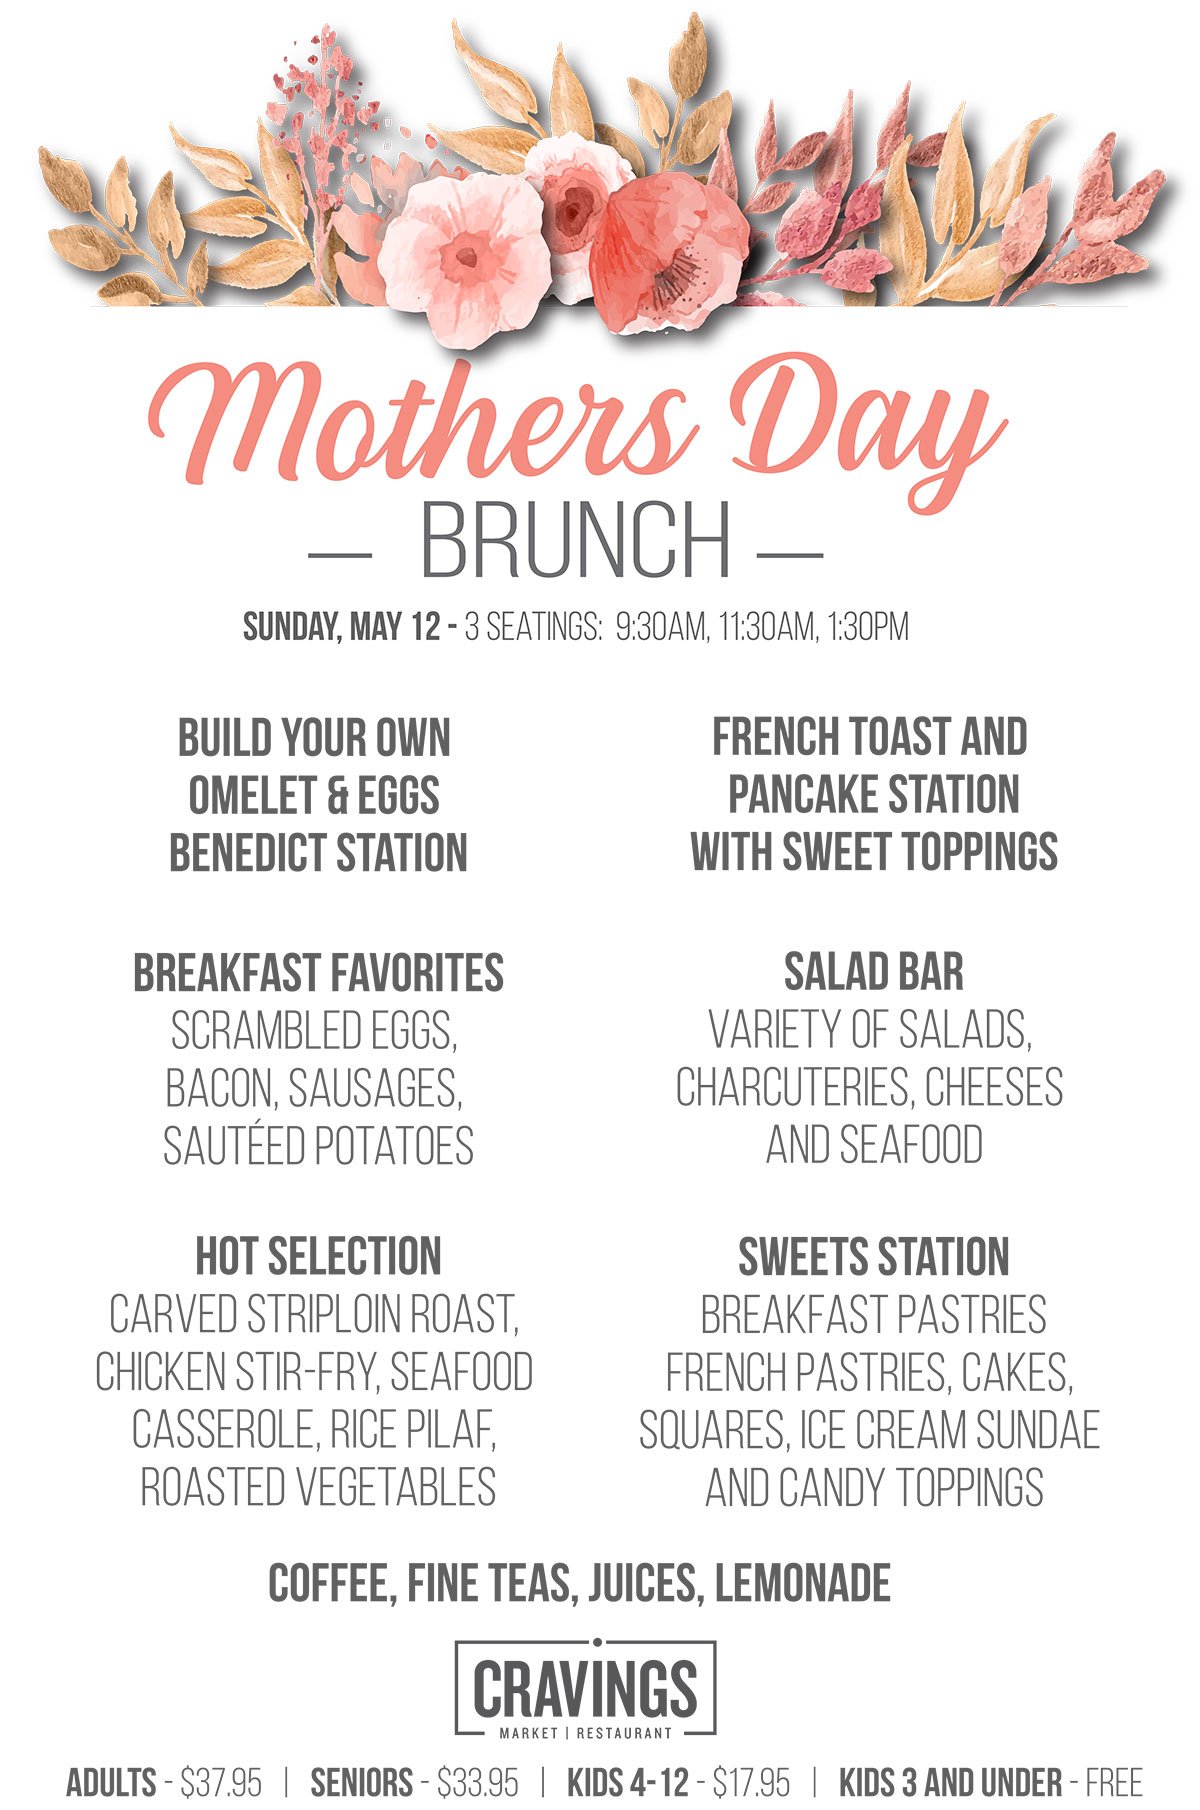 Cravings mothers day brunch menu